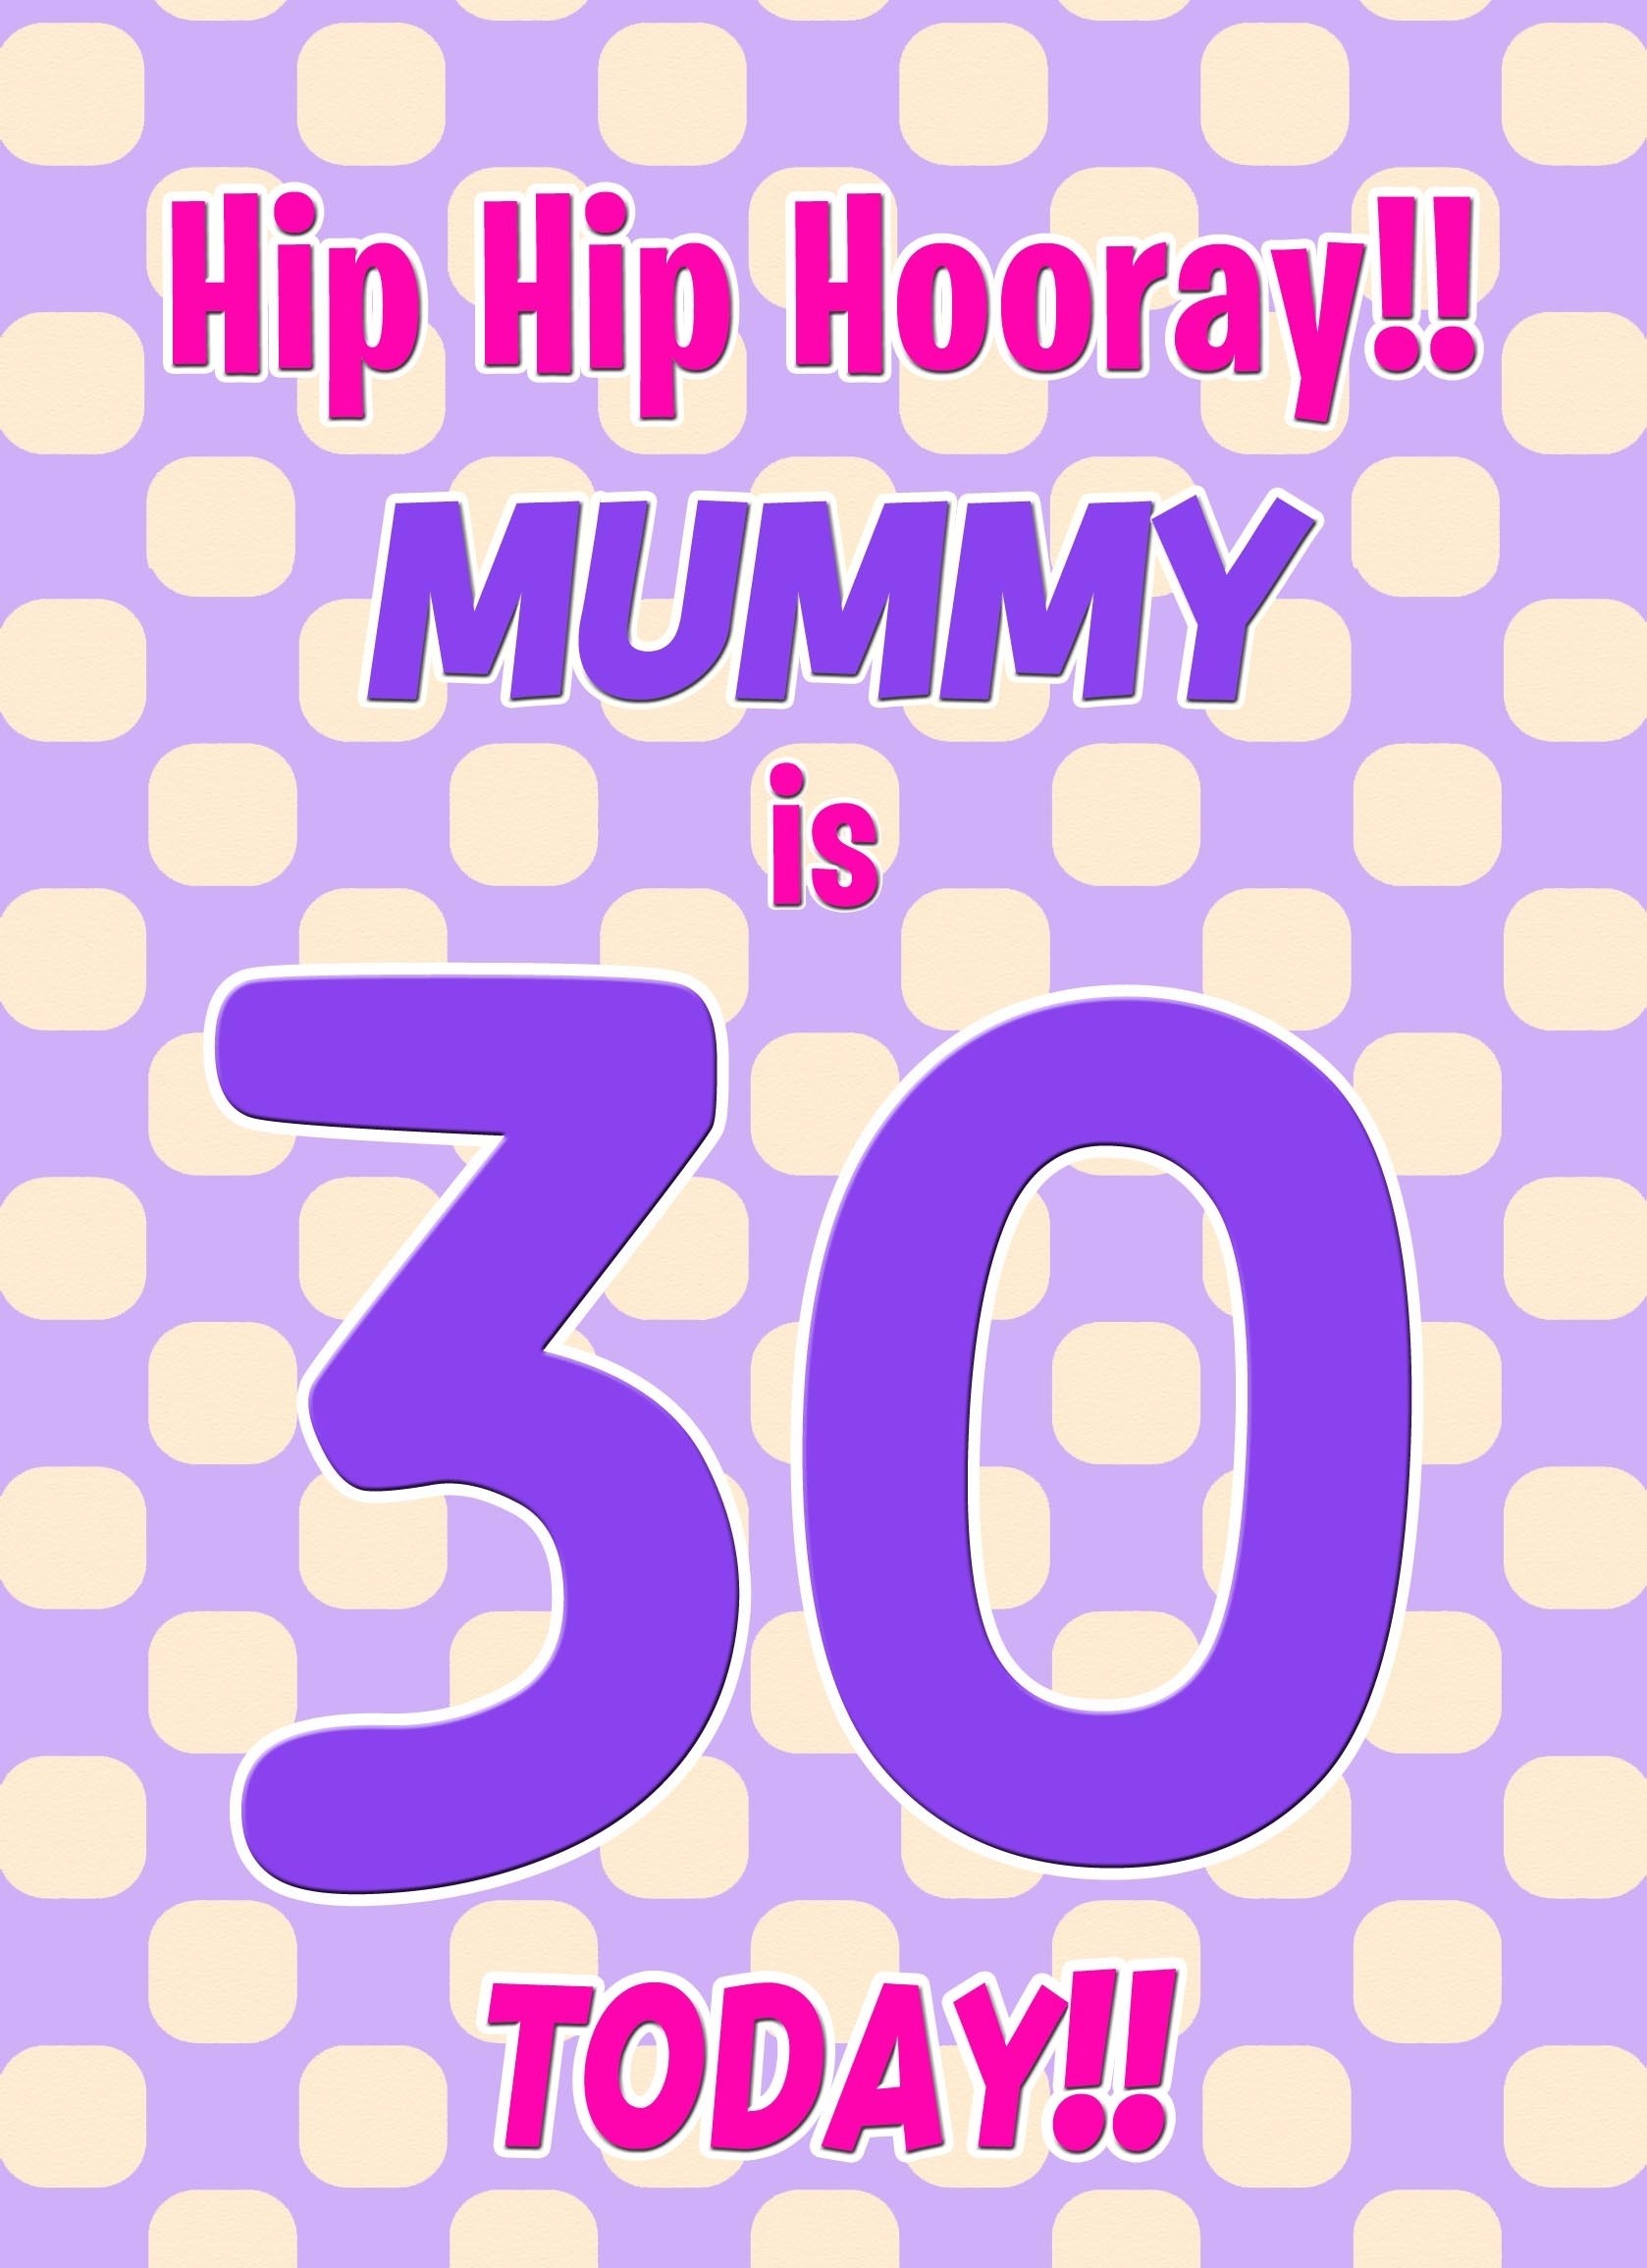 Mummy 30th Birthday Card (Purple Spots)